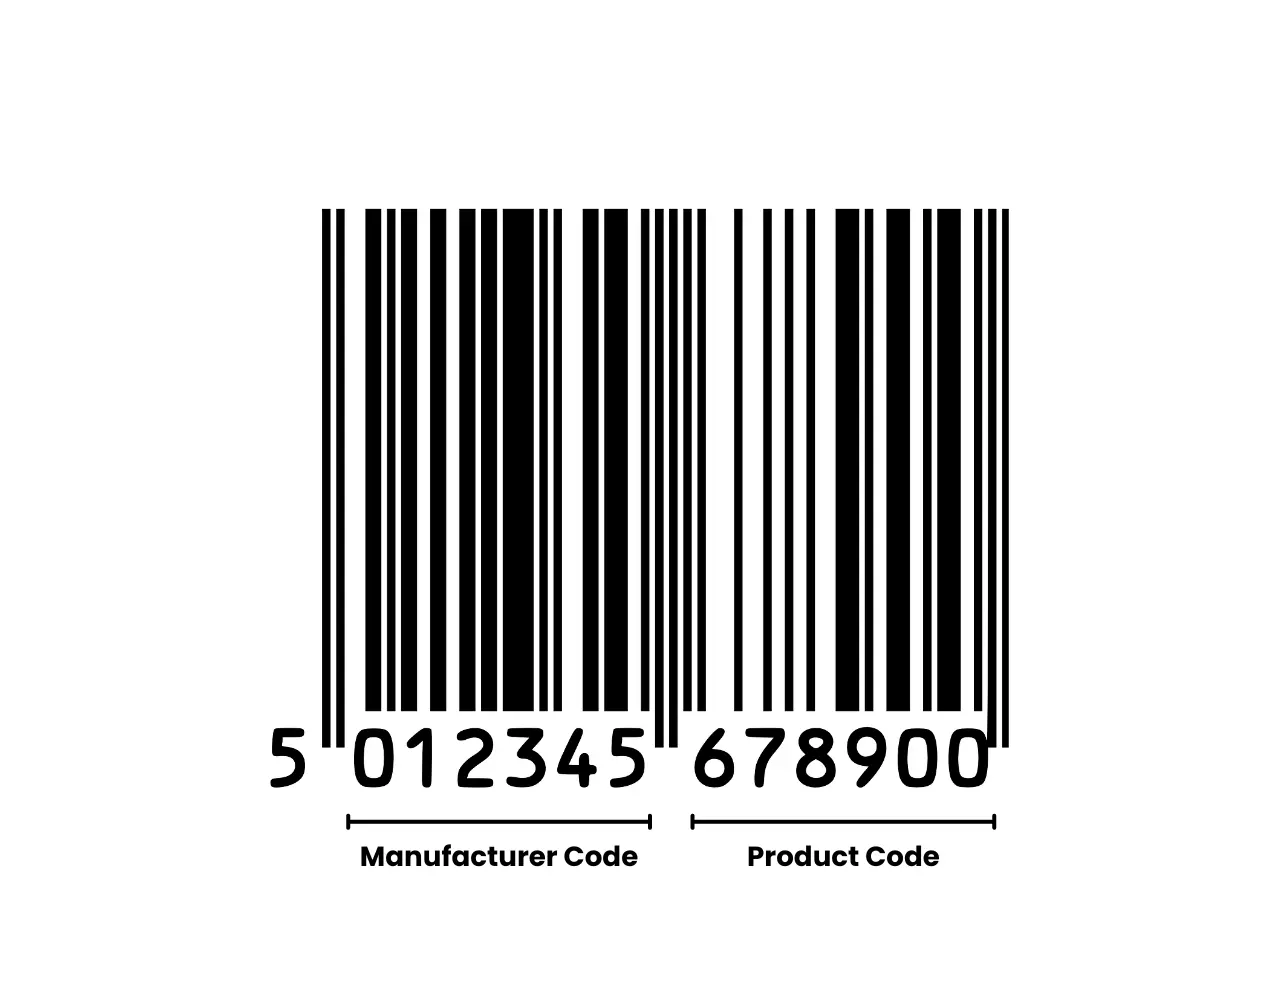 Komponen Barcode 2